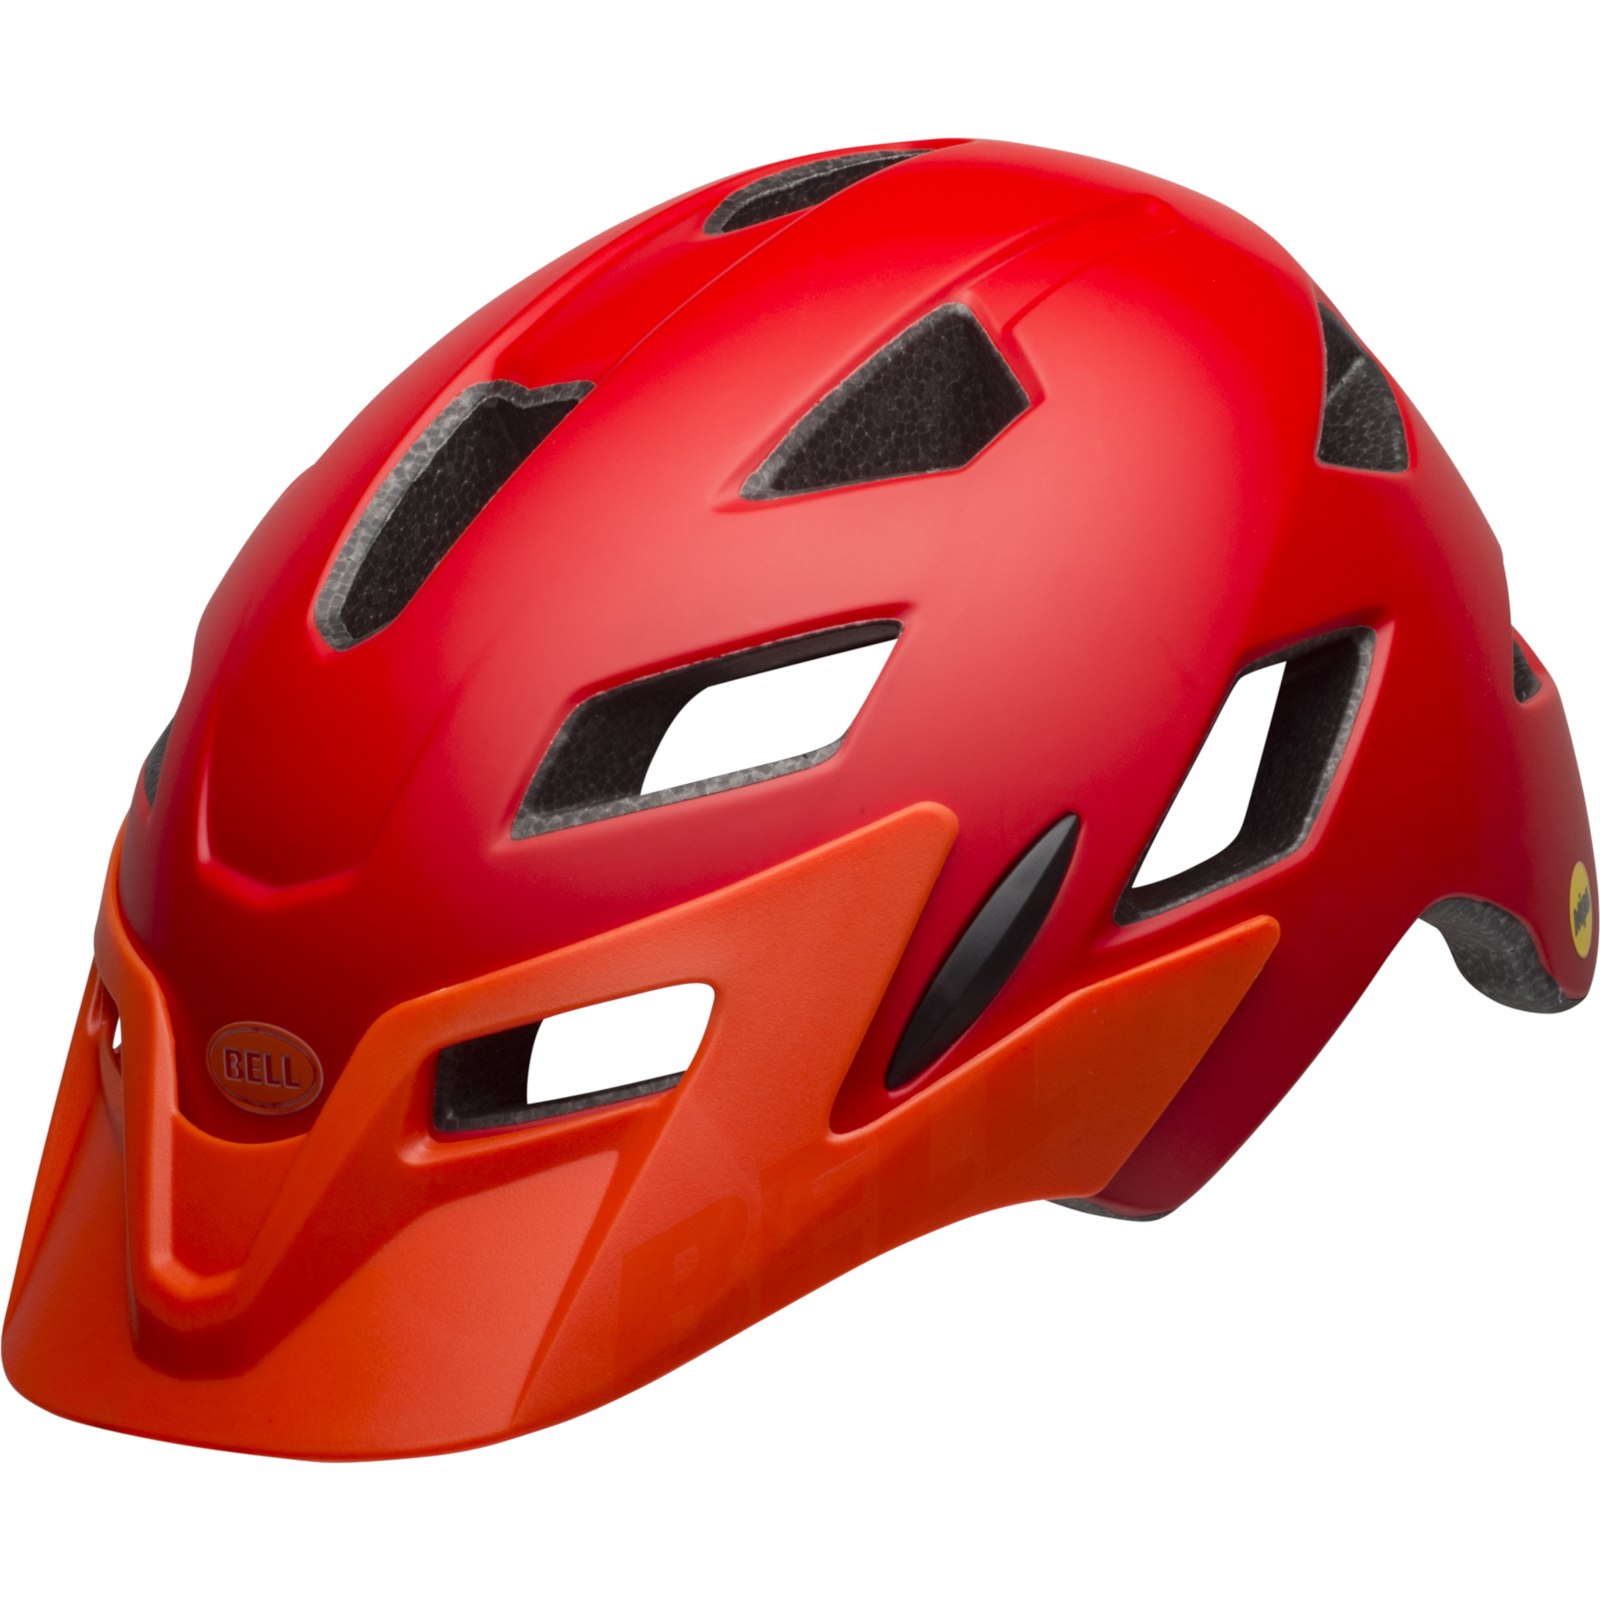 Image of Bell Sidetrack Youth MIPS Helmet UY (50-57 cm) - matte red/orange